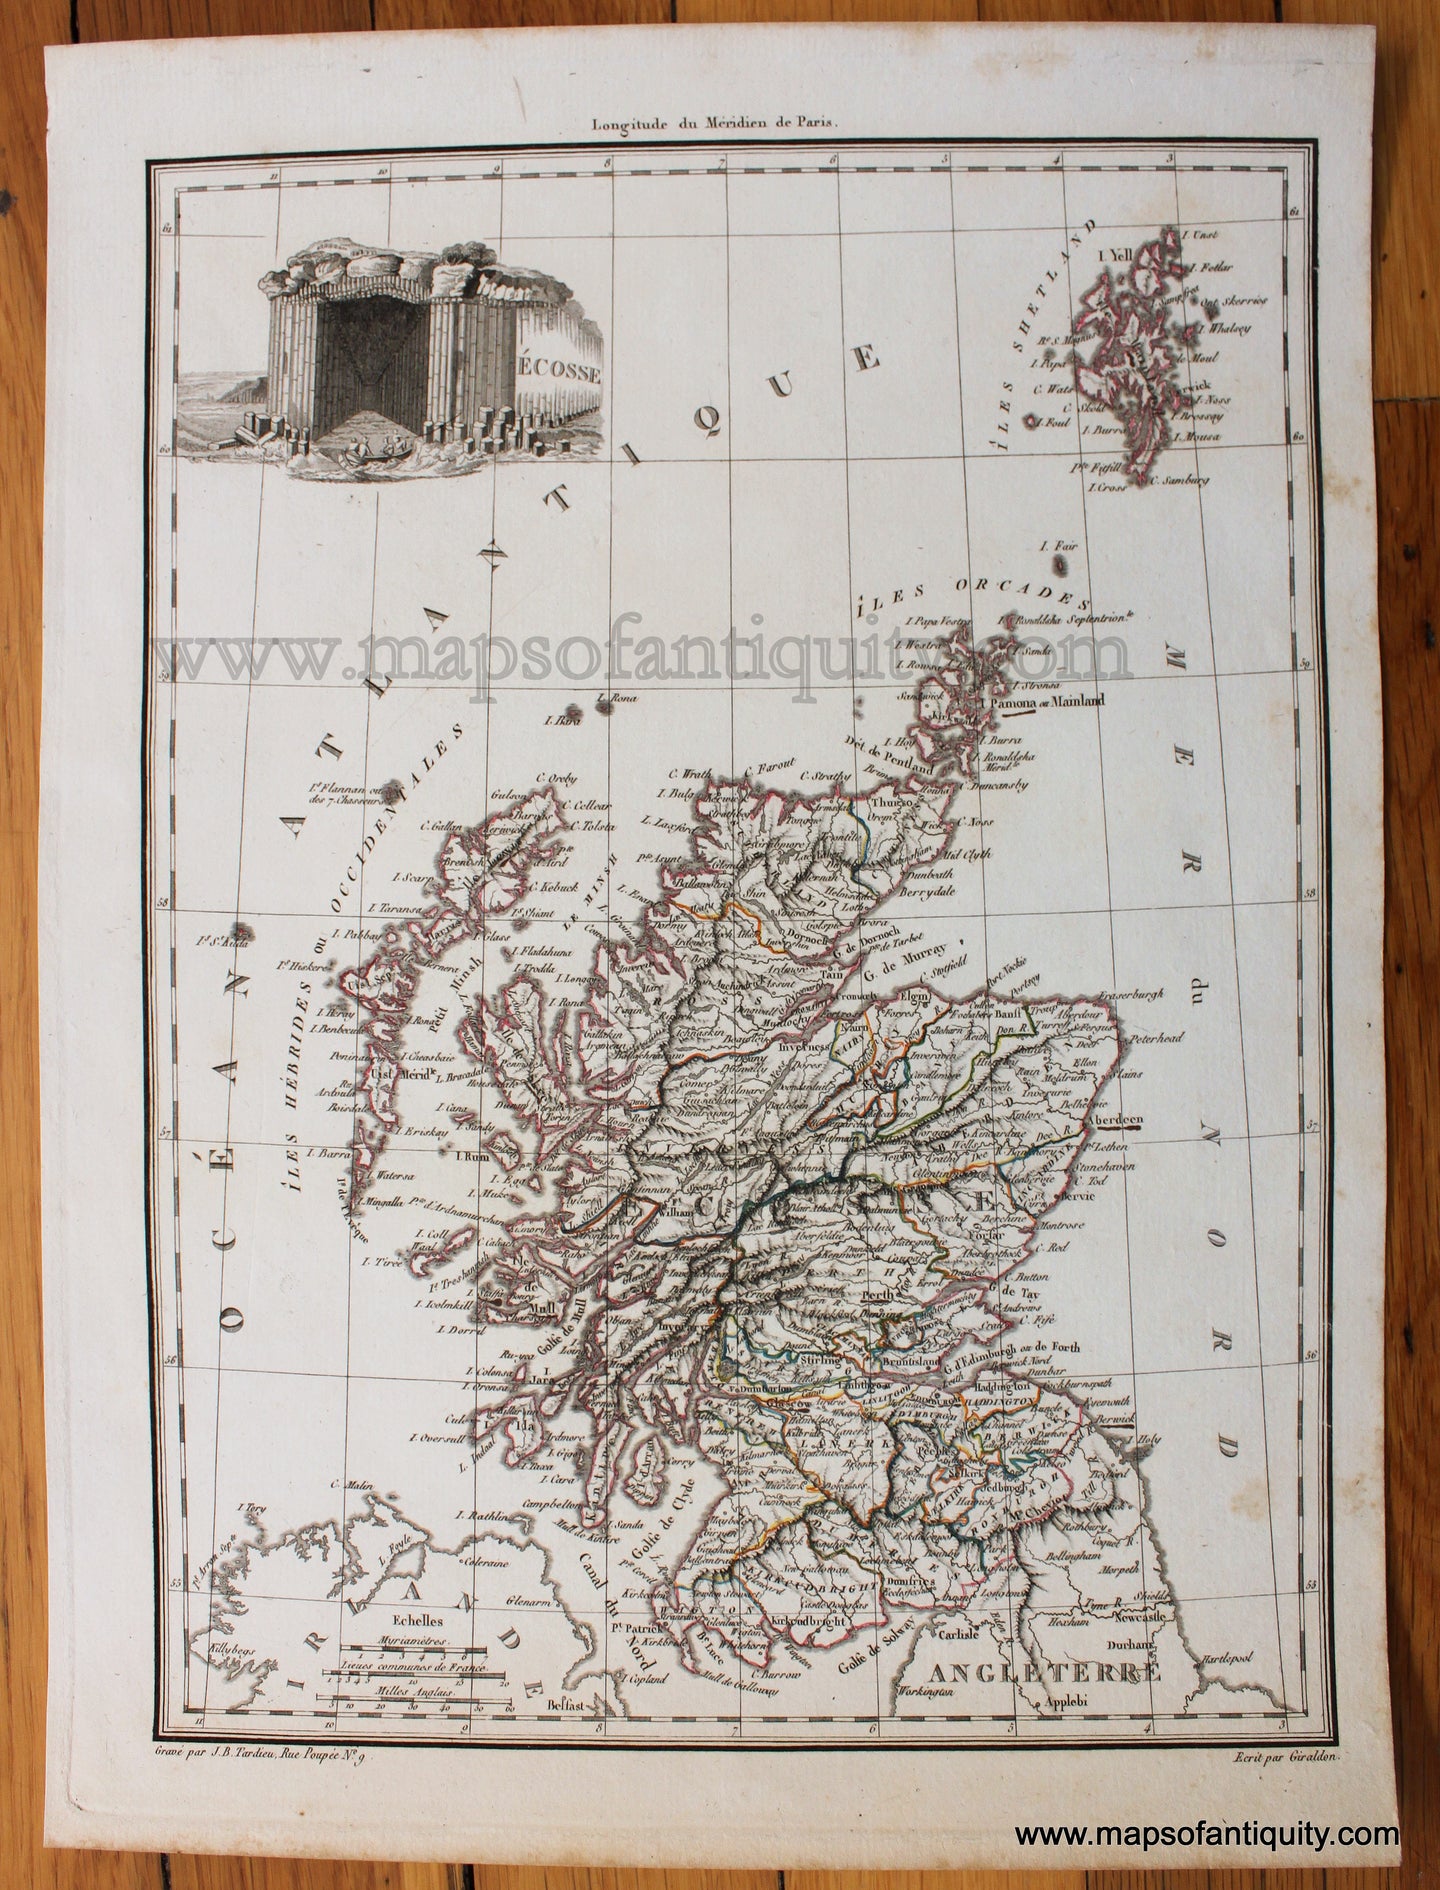 Antique-Hand-Colored-Map-Ecosse-1812-Lapie-Tardieu-Scotland-1800s-19th-century-Maps-of-Antiquity